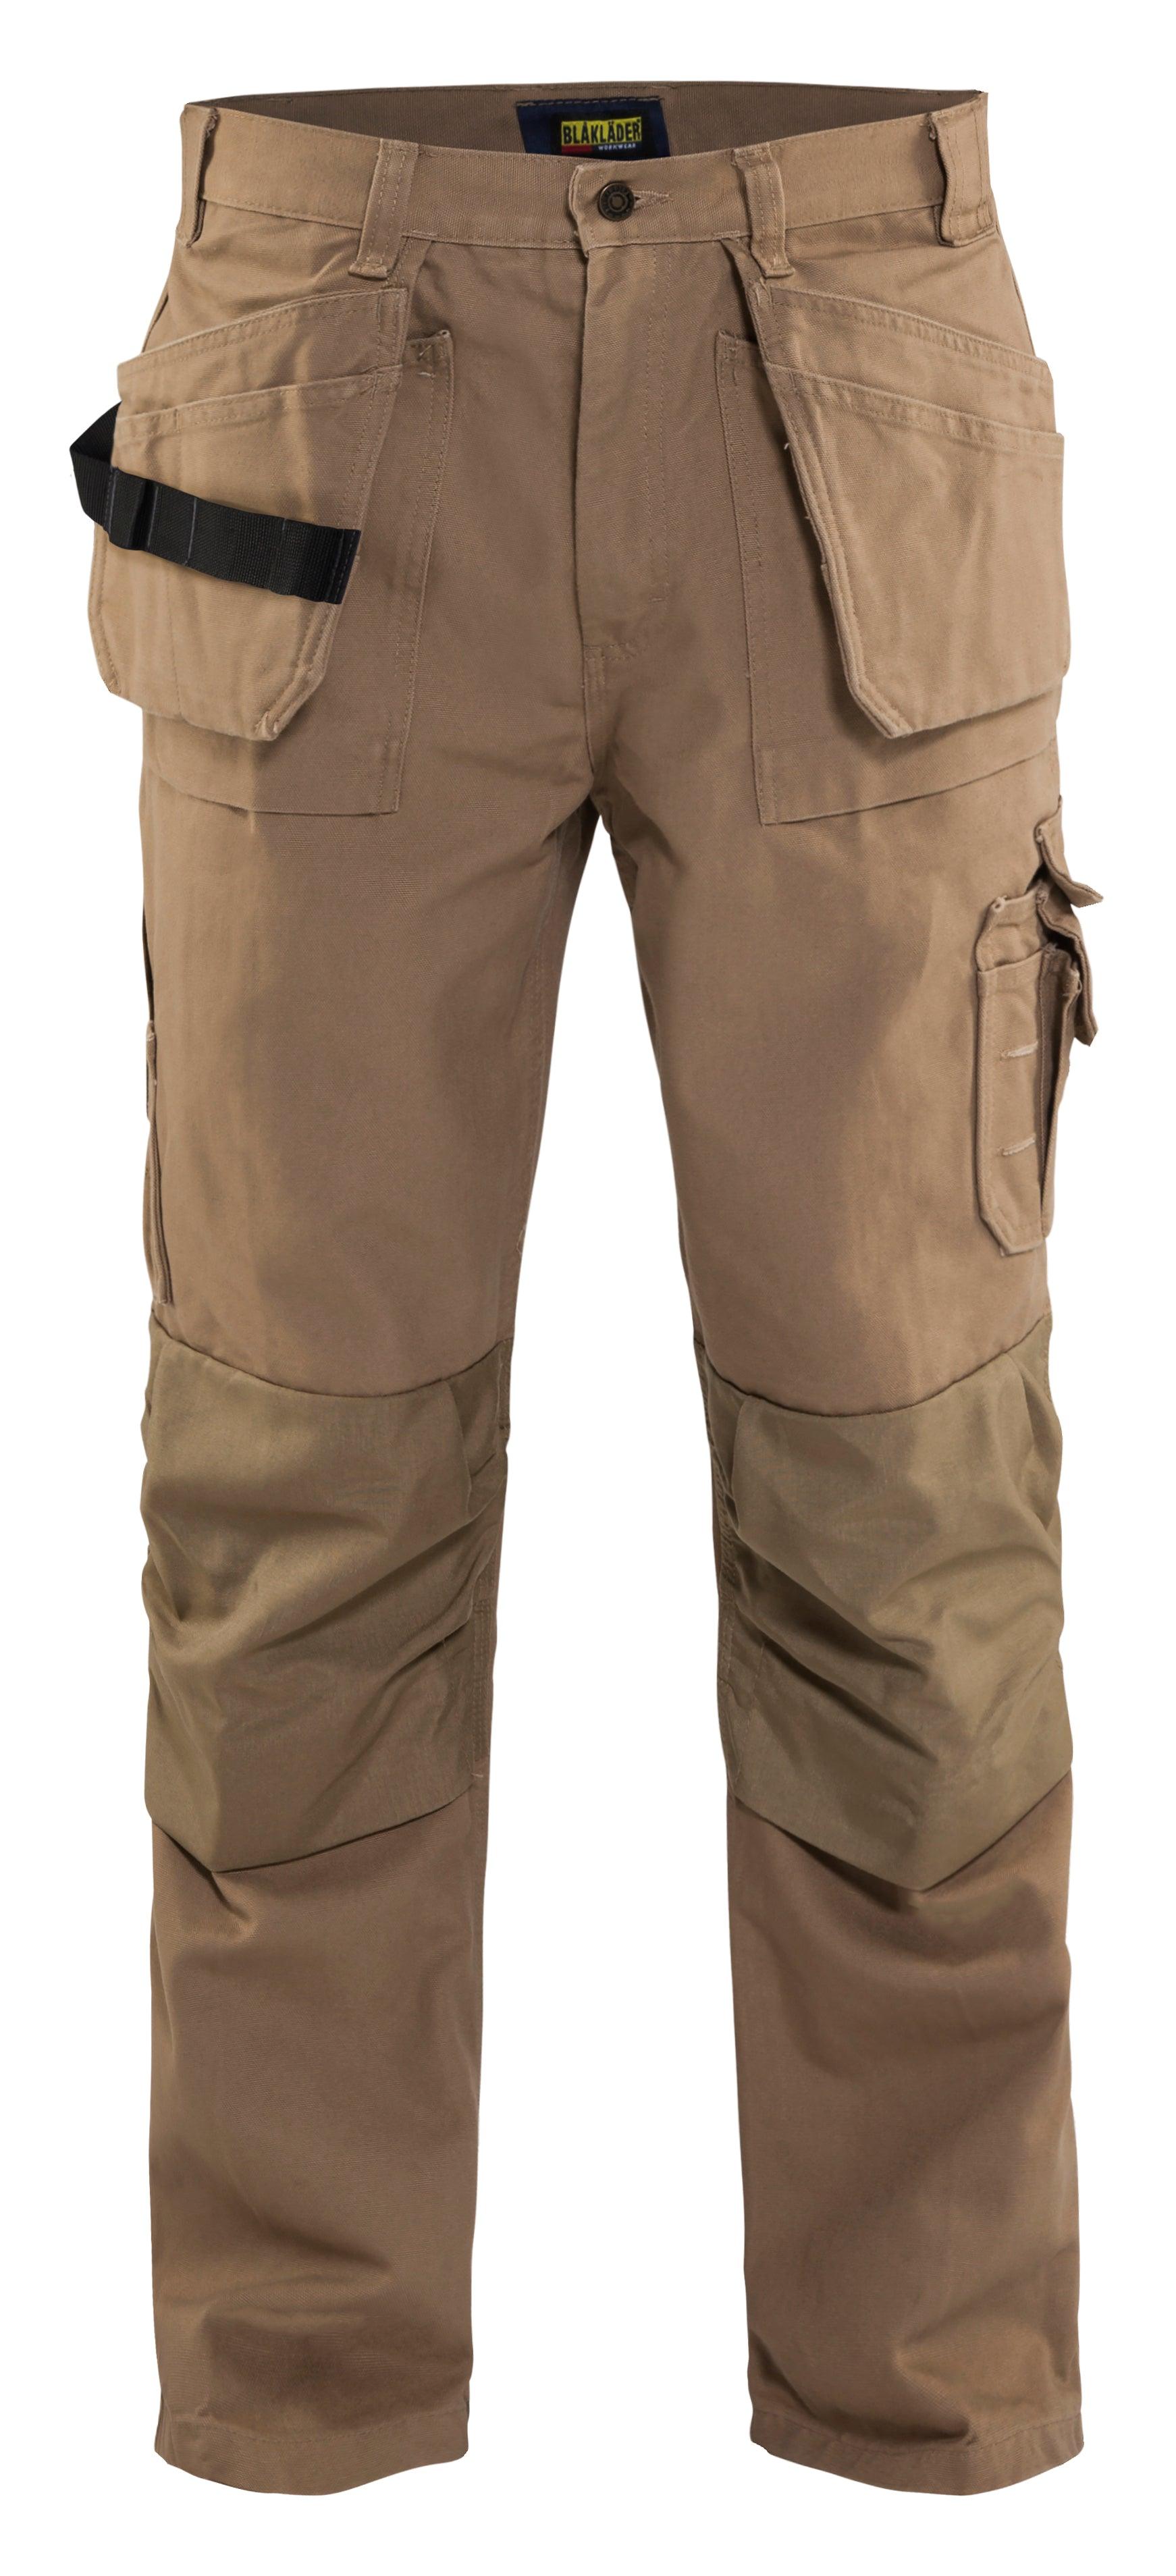 Blaklader 1630 12oz Brawny Work Pants with Utility Pockets - Antique Khaki - Trusted Gear Company LLC